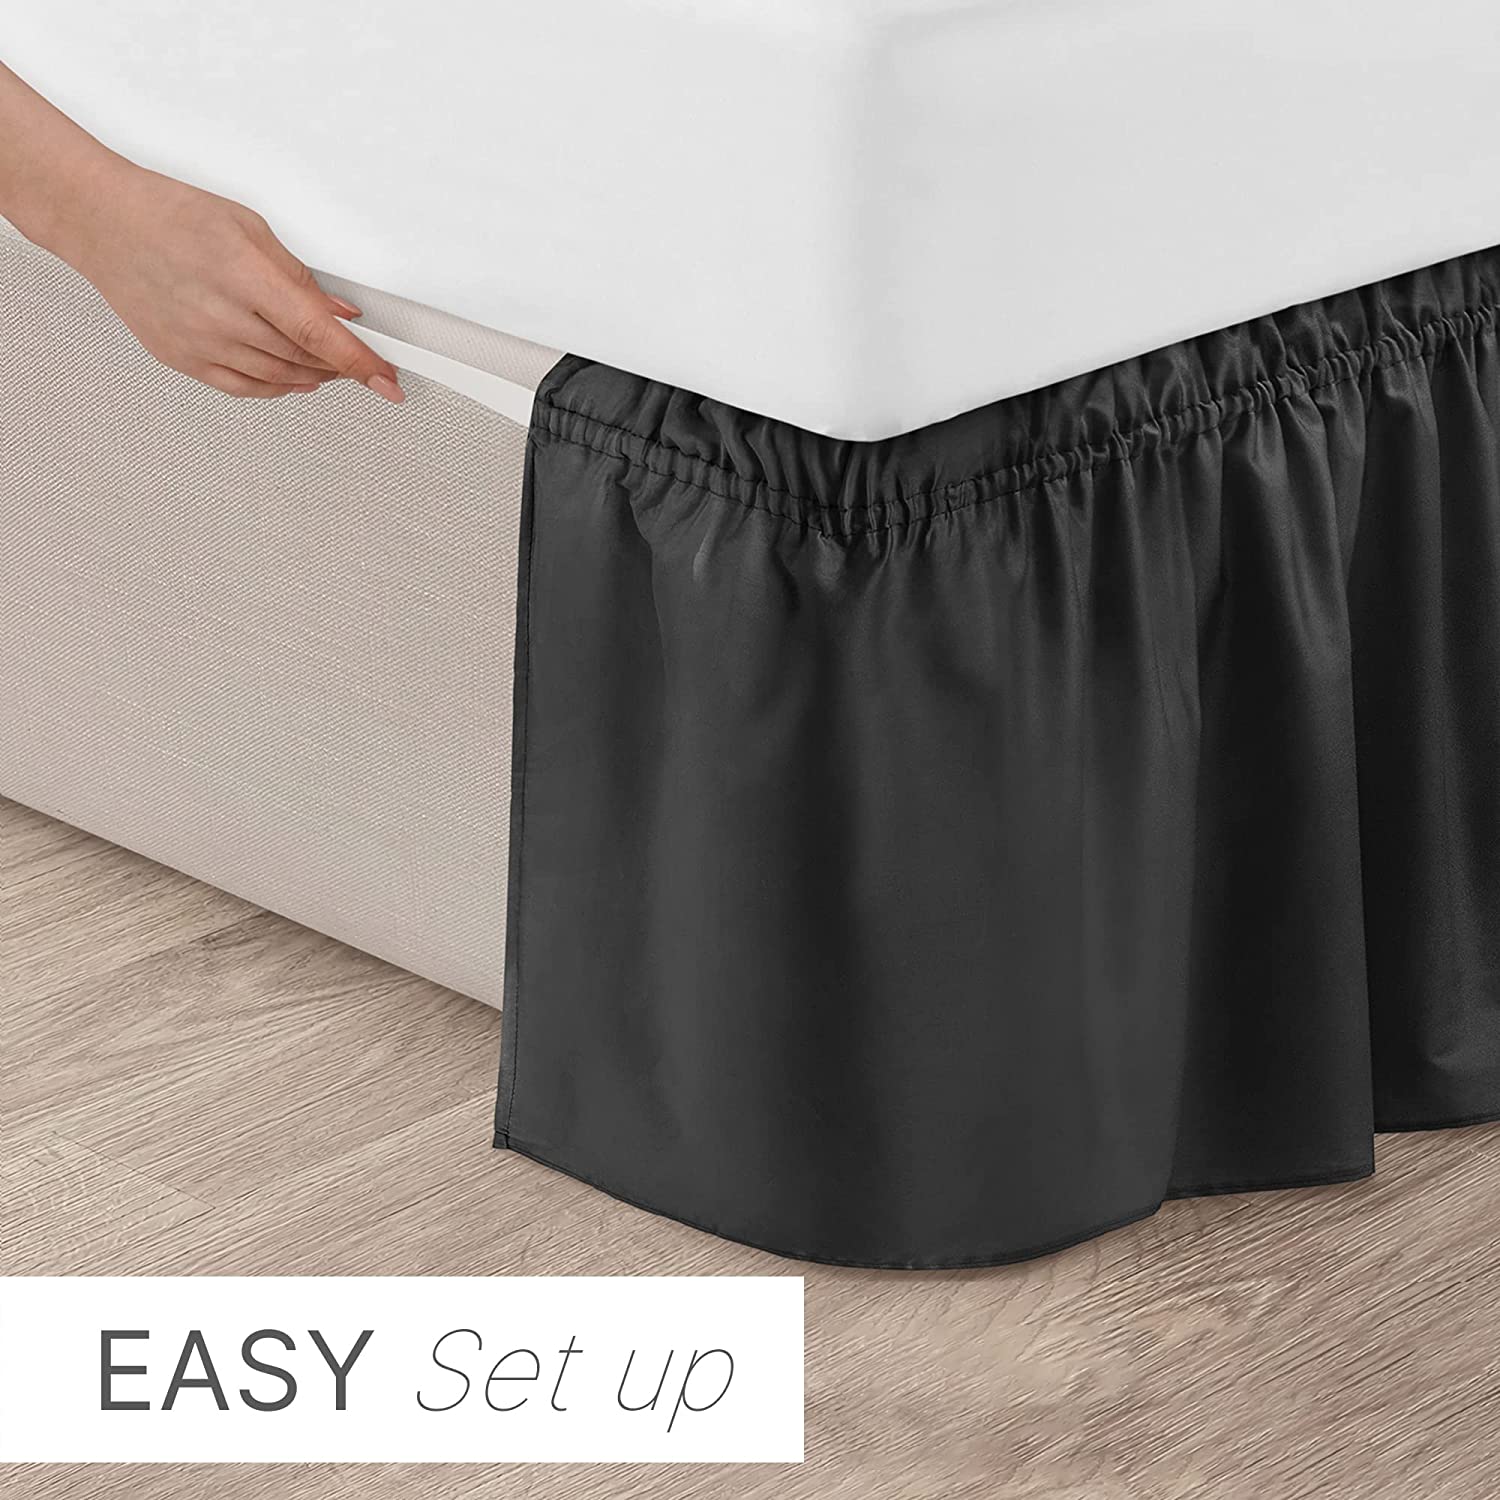 tes Ruffled Elastic Wrap Around Bedskirt 15 Inch Drop - Black